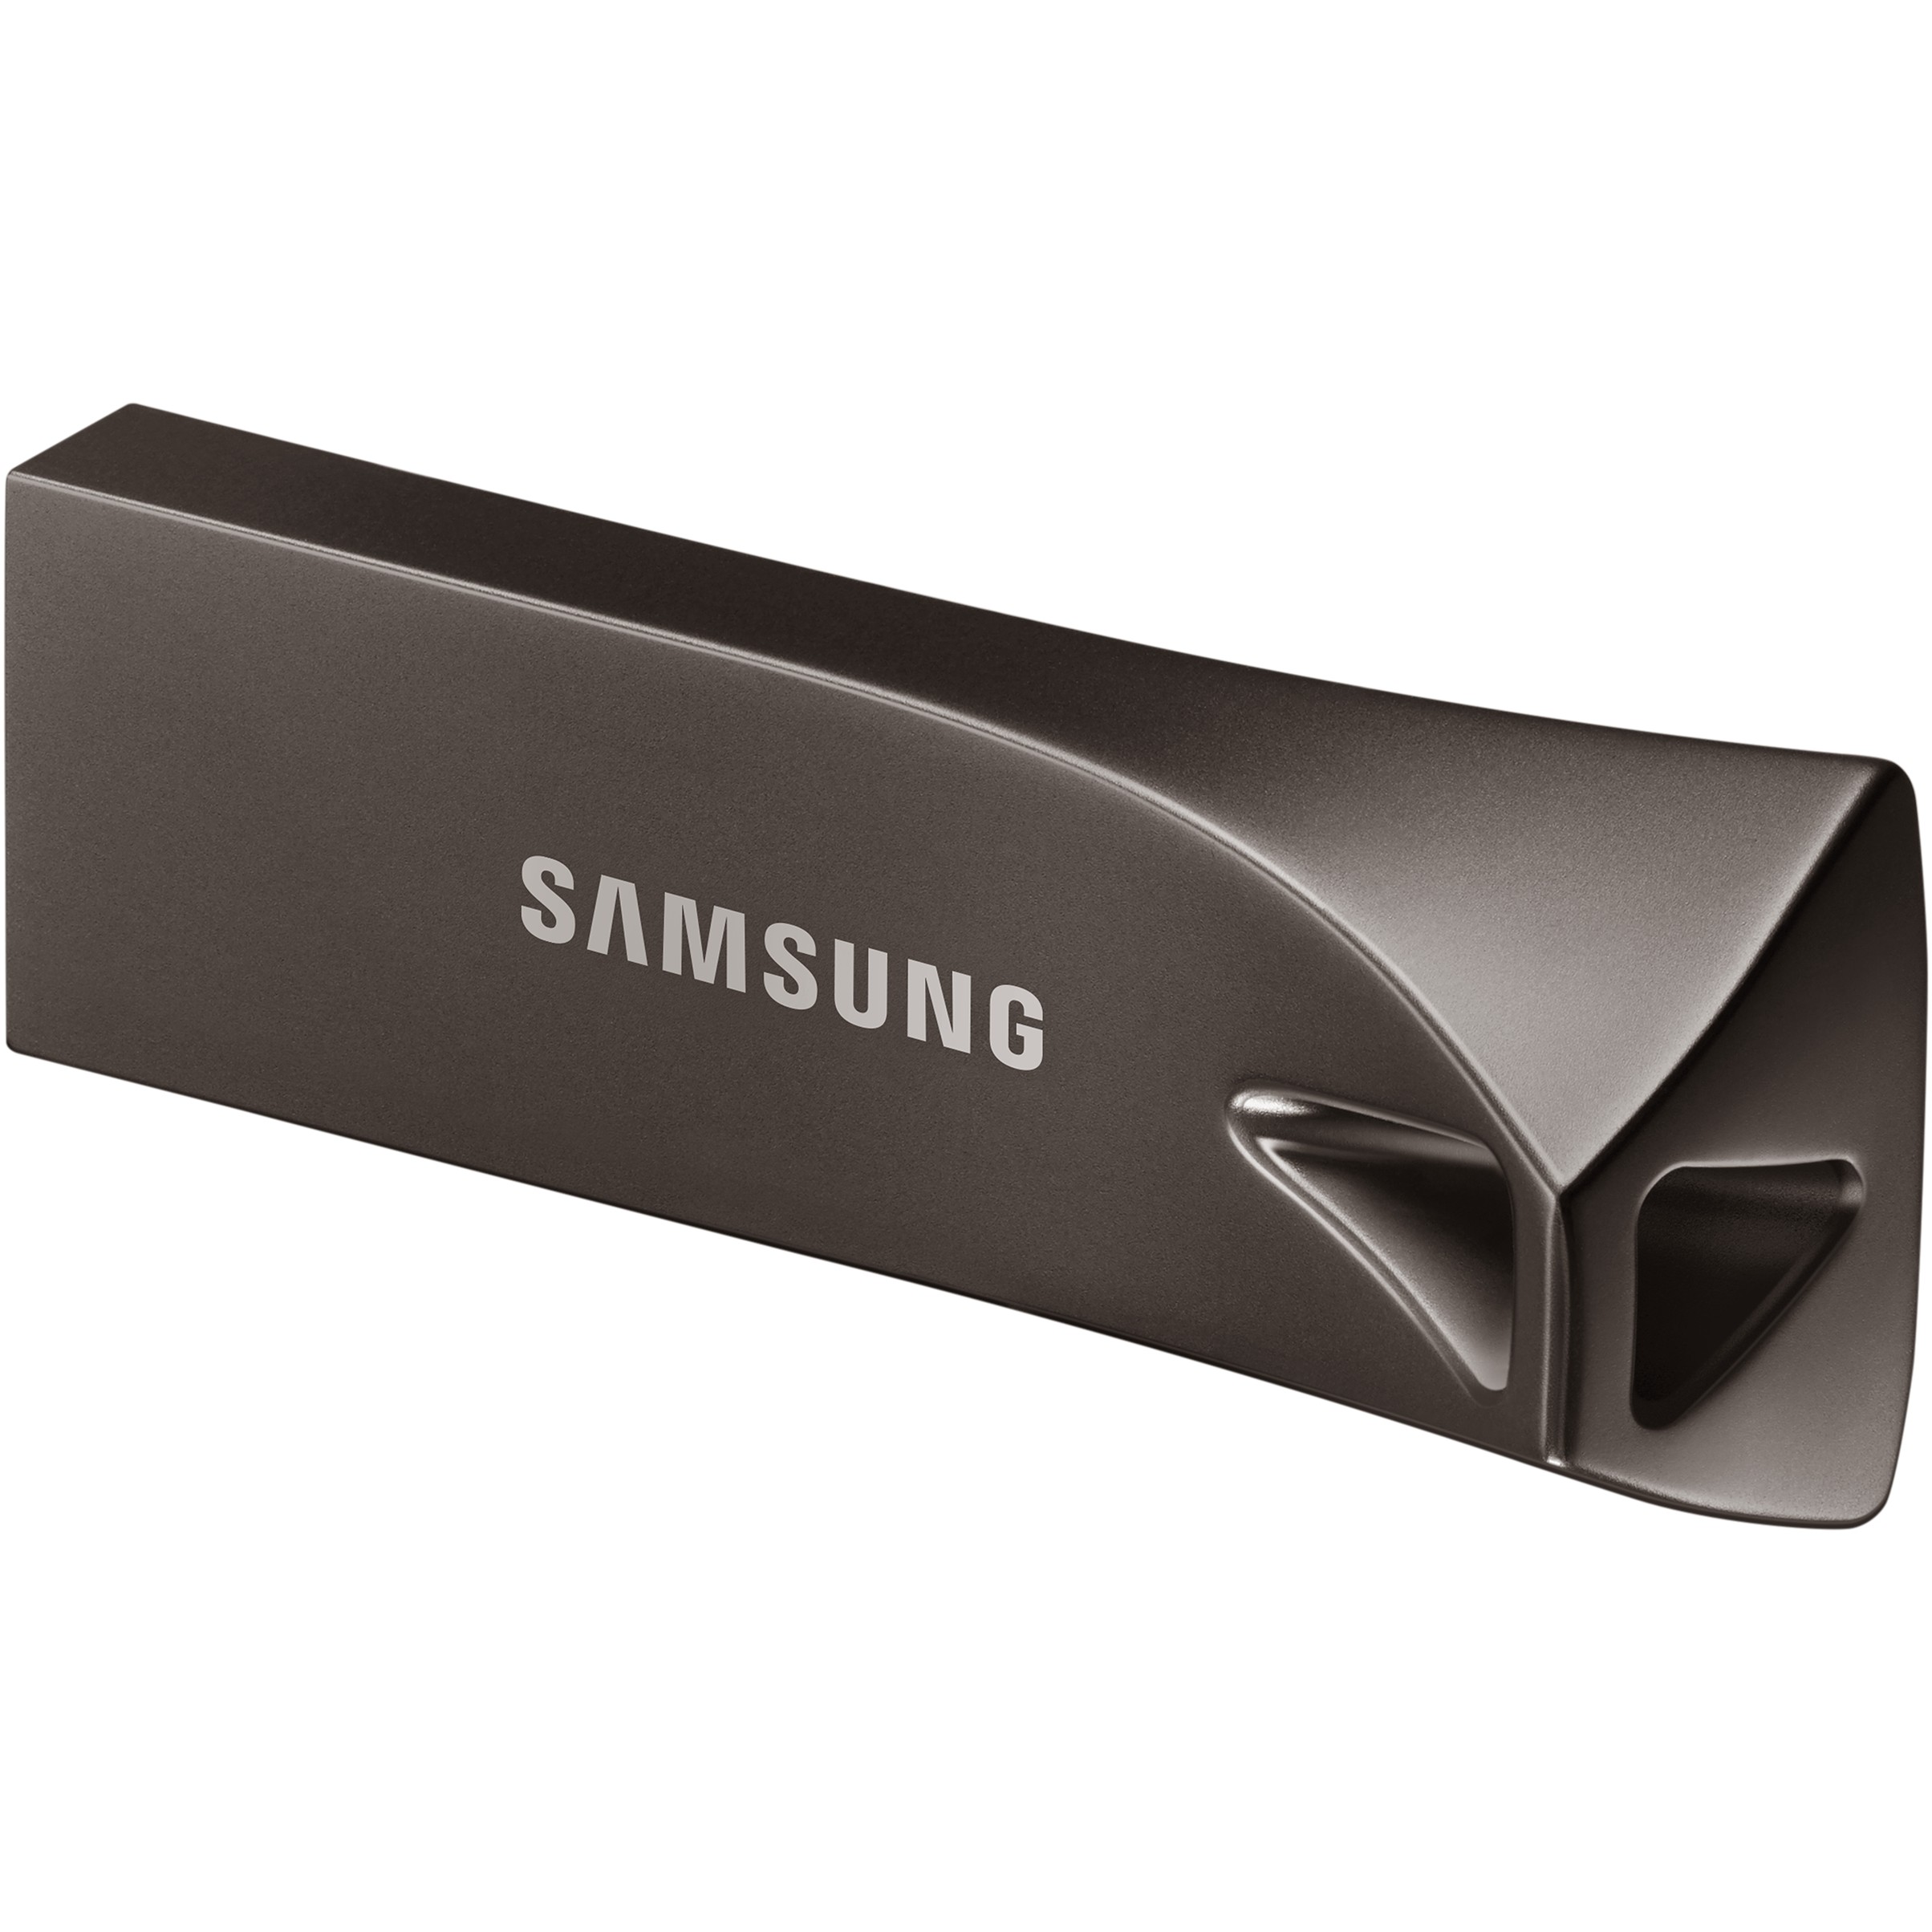 SAMSUNG MUF-128BE4/APC, USB-Stick, Samsung MUF-128BE USB  (BILD3)